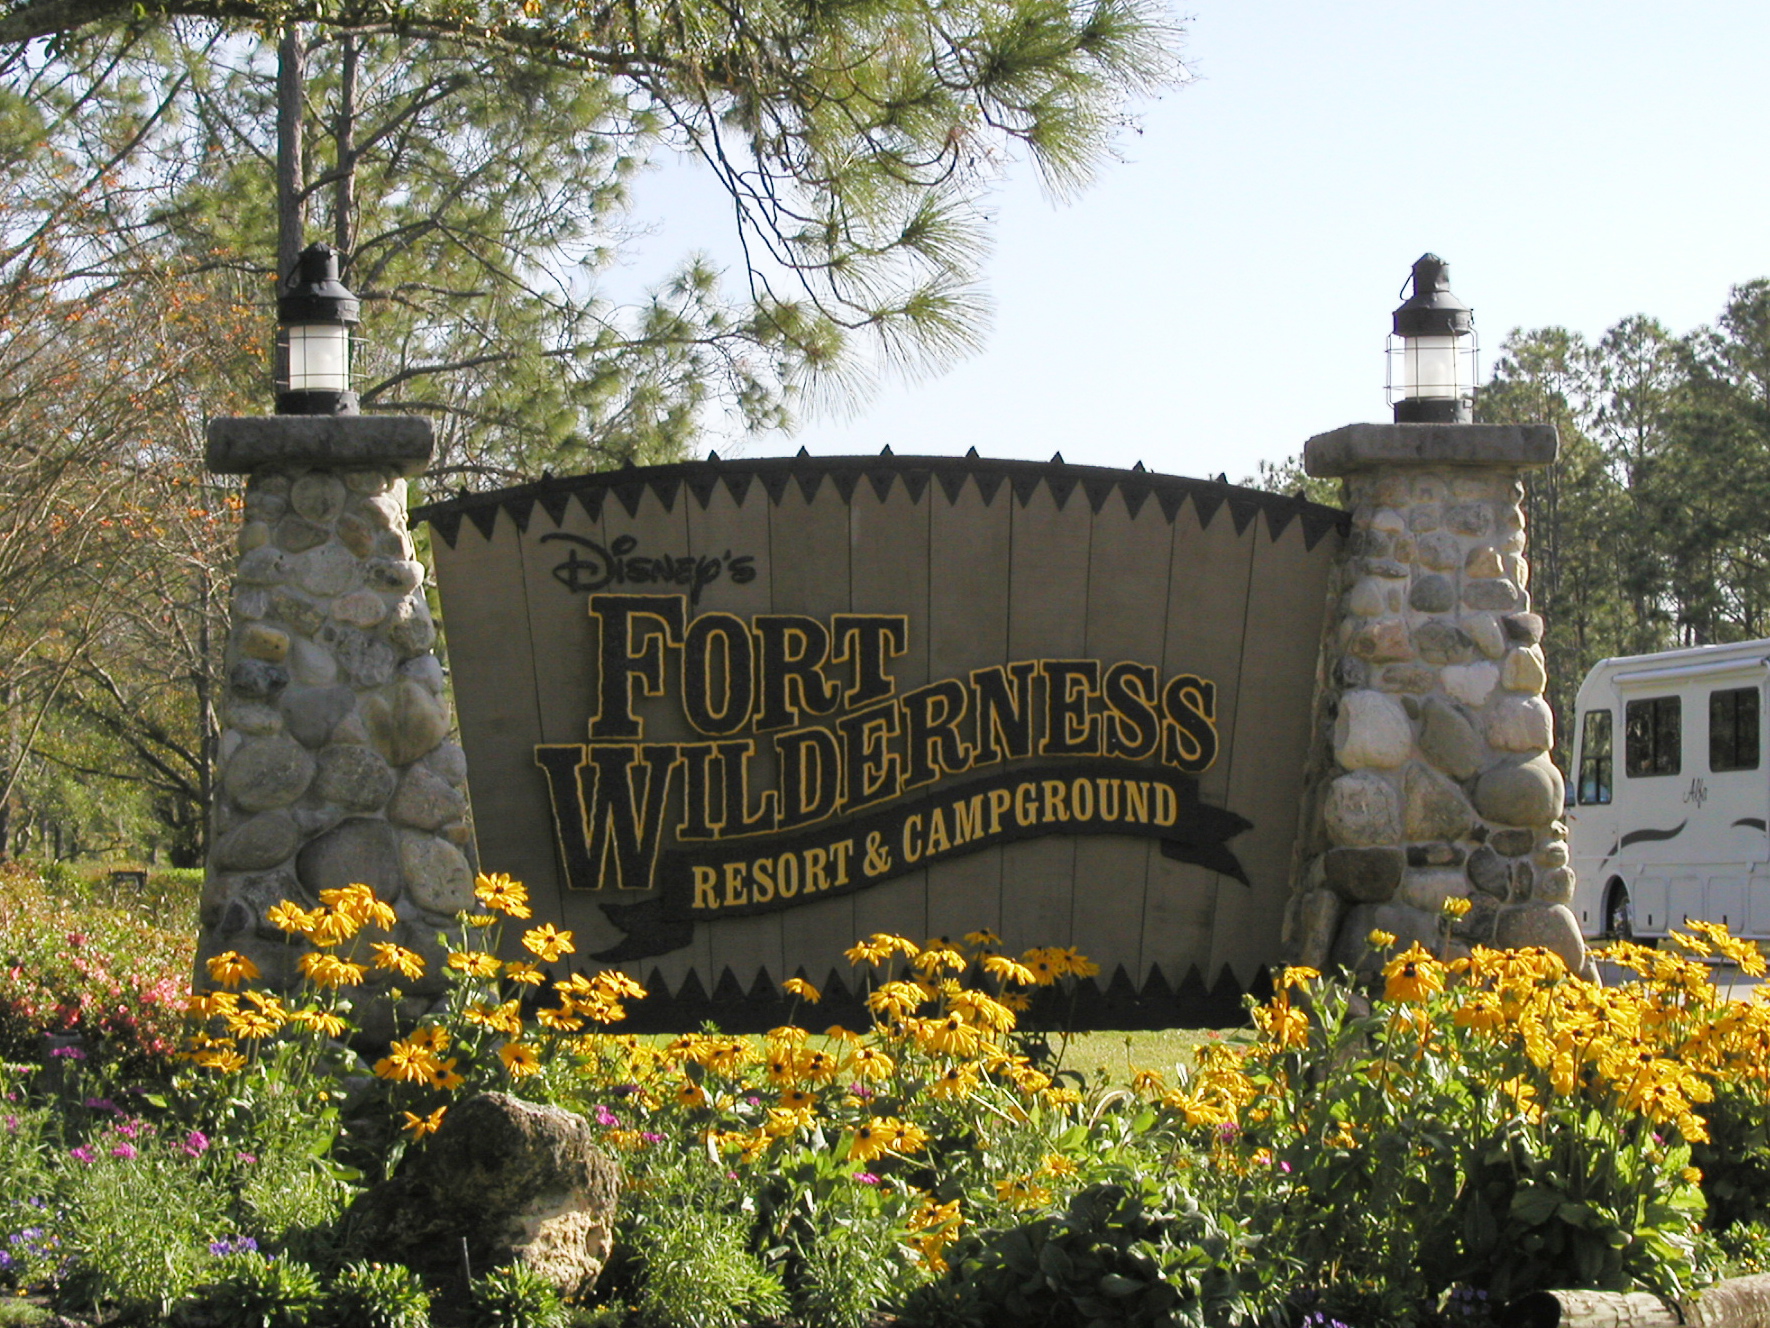 Disney's_Fort_Wilderness_Resort_and_Campground_sign.jpg